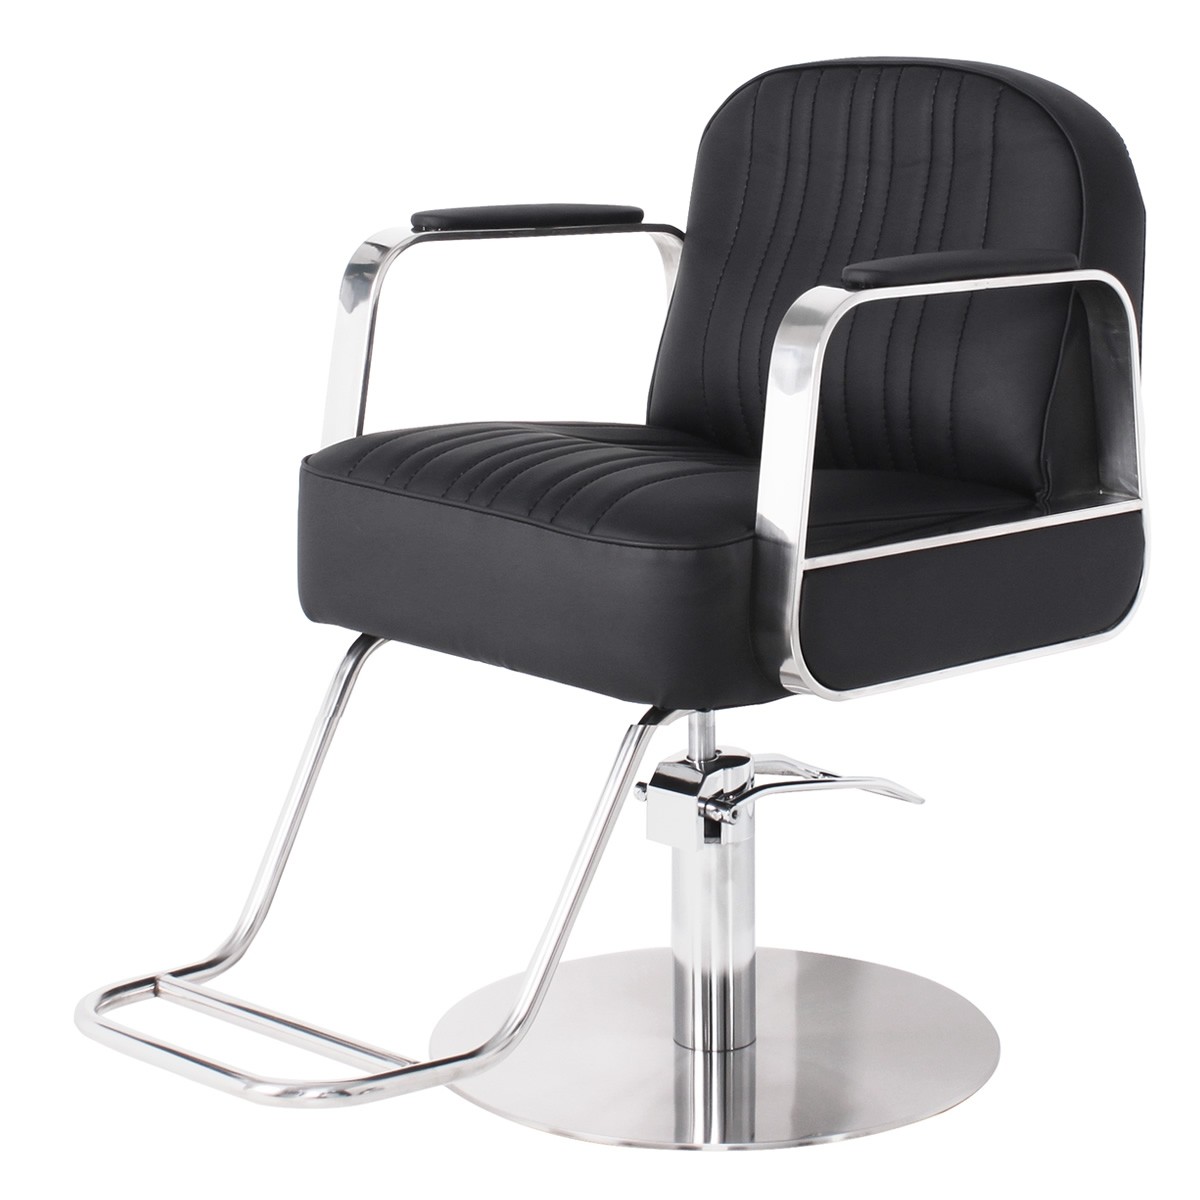  "OSAKA" Hair Styling Chair